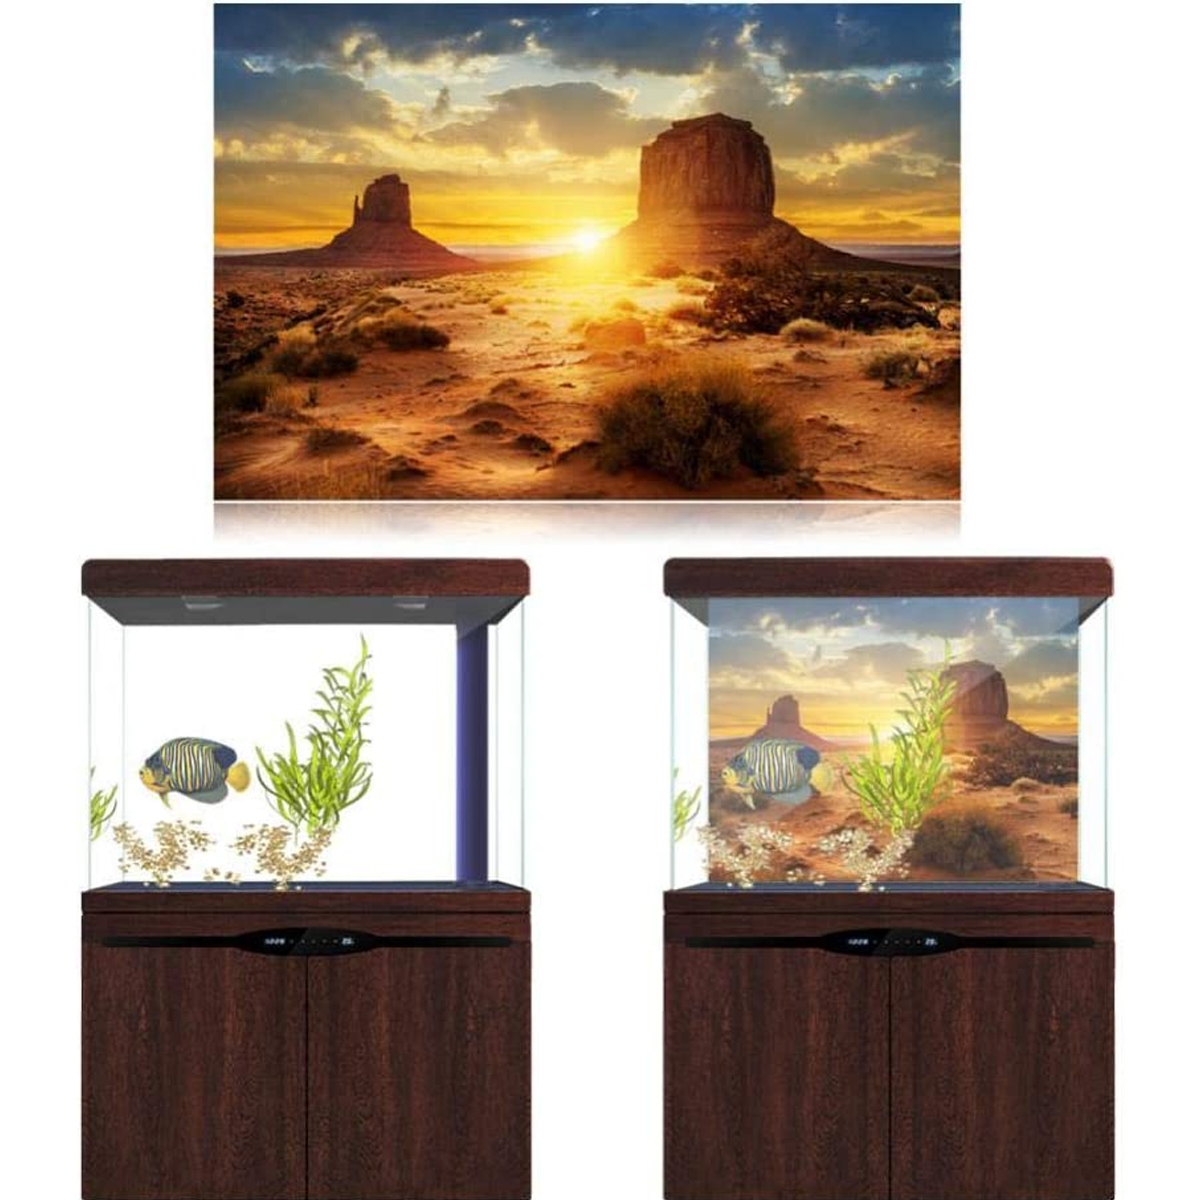 Sun-Desert-Adhesive-Poster-Aquarium-Fish-Tank-Background-Sticker-Home-Office-Decor-1749093-5